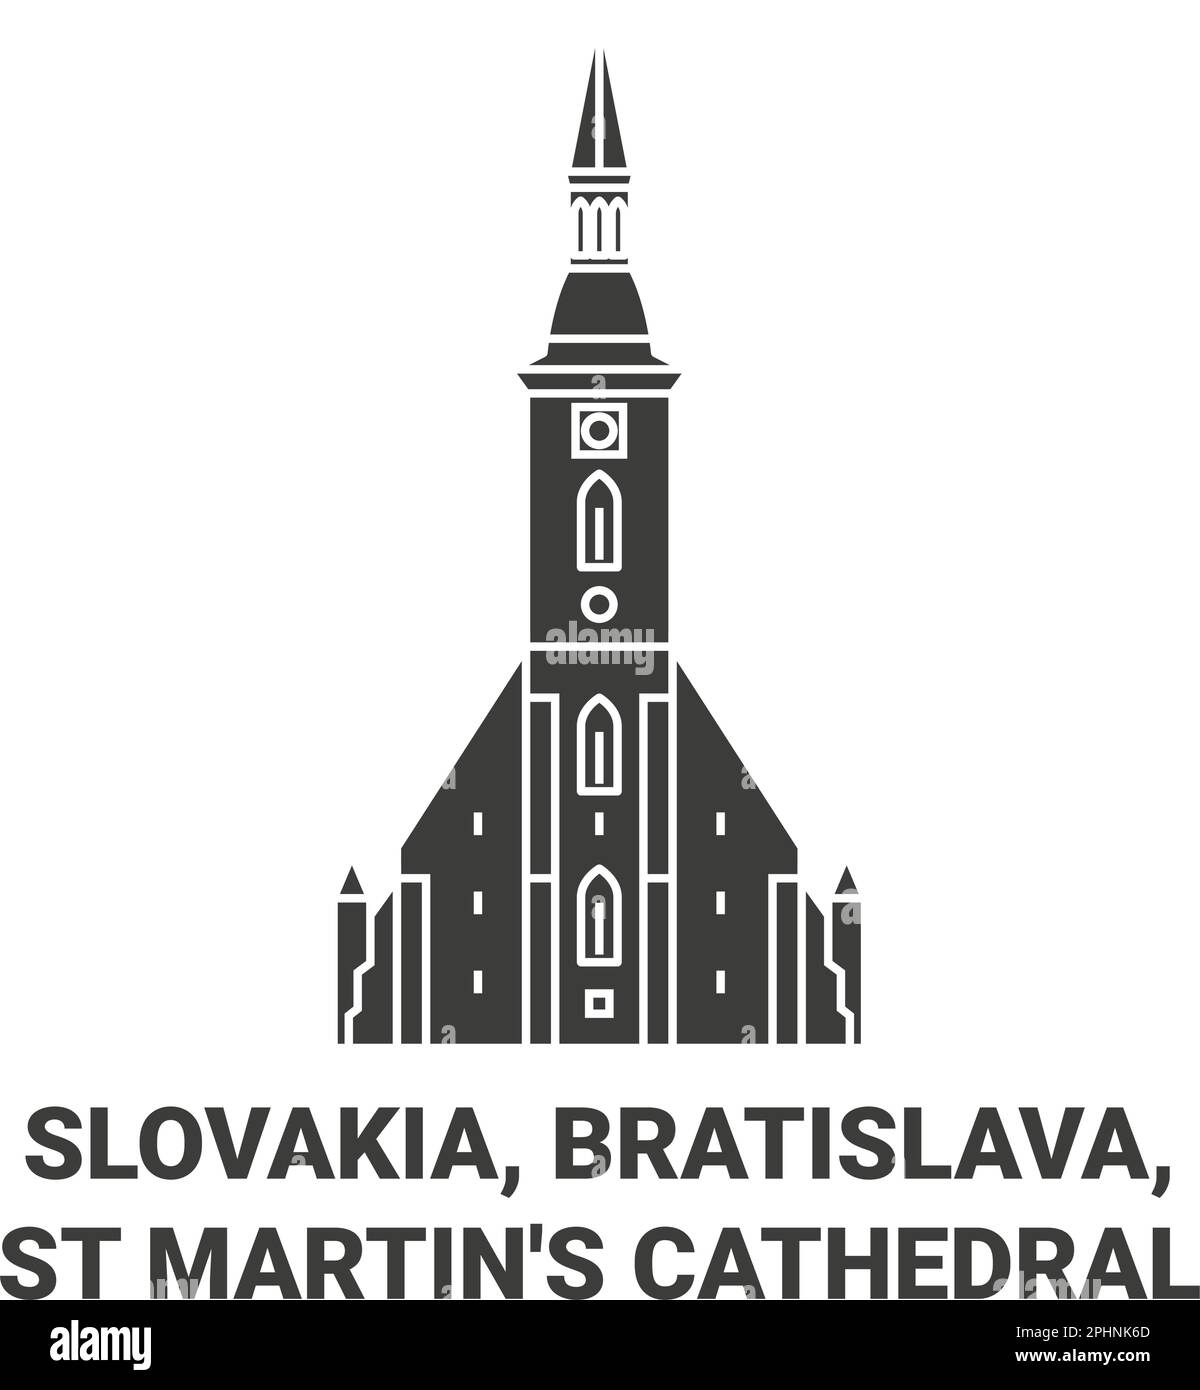 Slowakei, Bratislava, St. Martin's Cathedral reisen als Vektorbild Stock Vektor